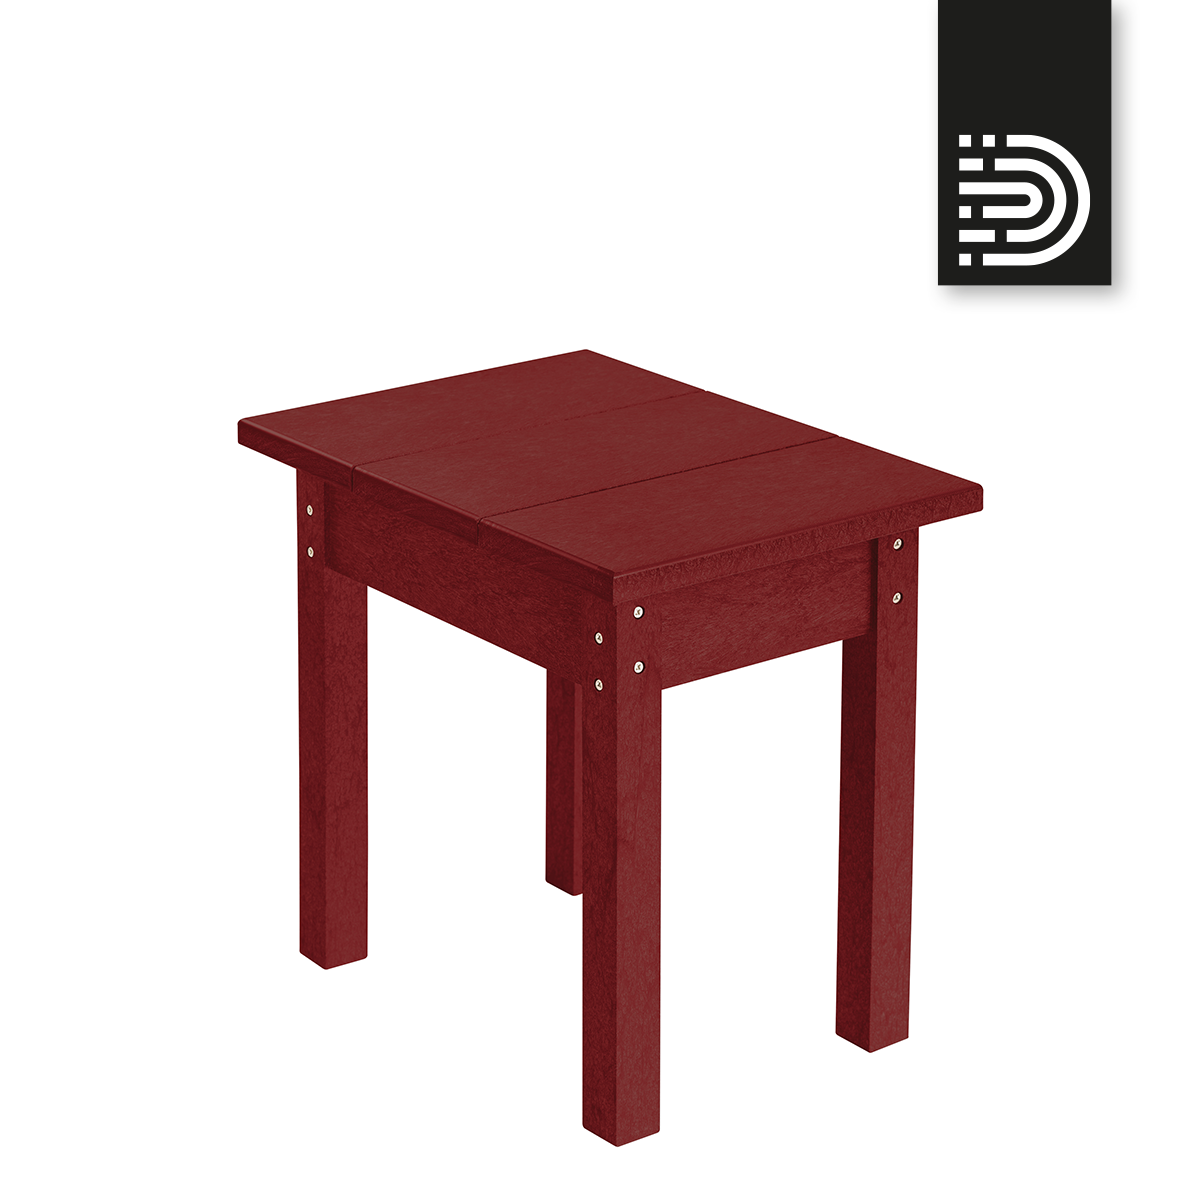 T01 small rectangular table - burgundy 05